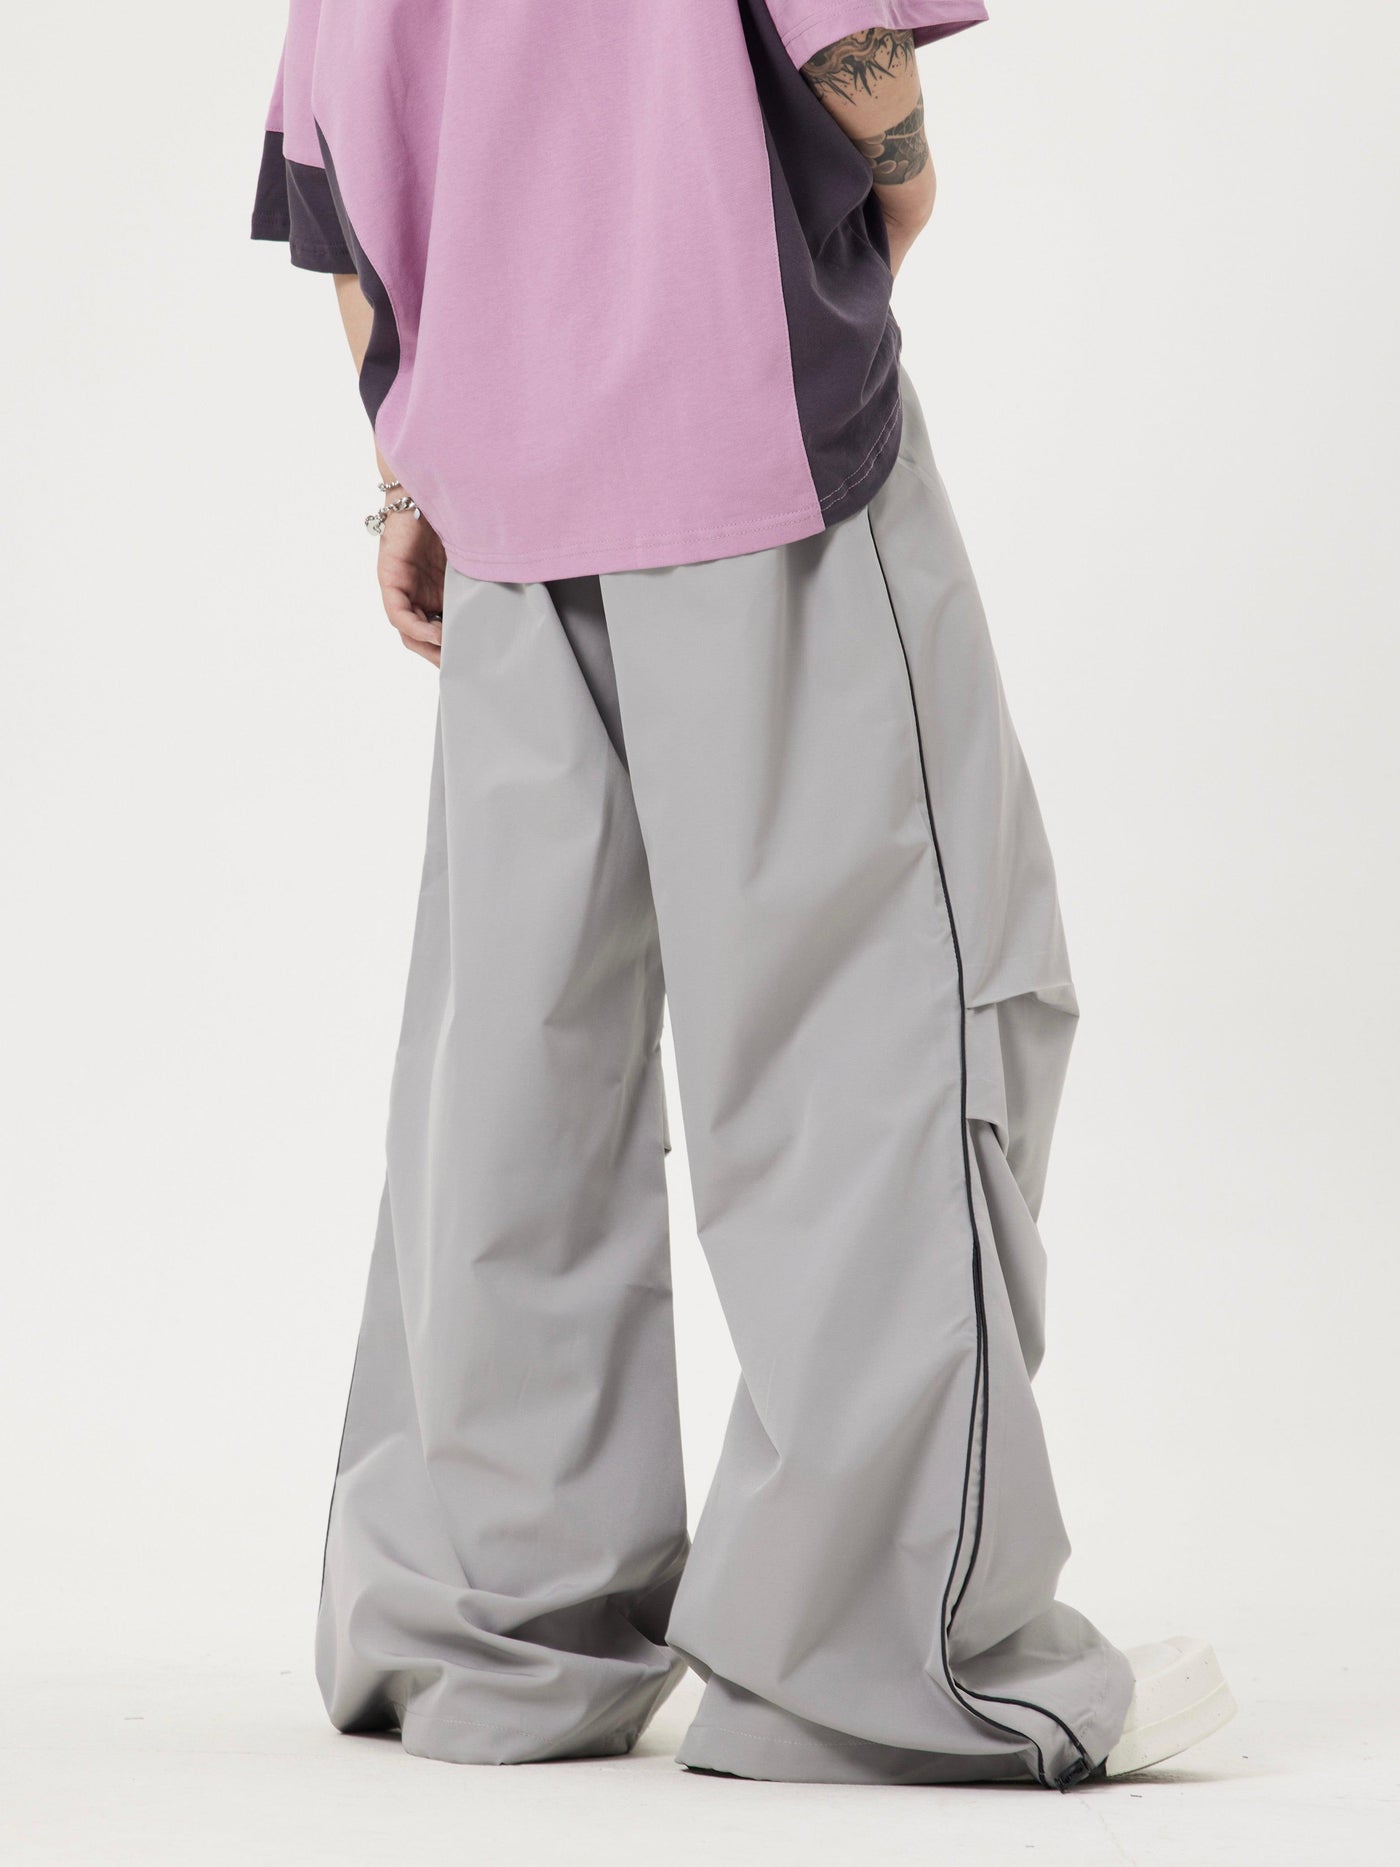 Dark Fog Piping Contrast Pleated Wide Cut Pants Korean Street Fashion Pants By Dark Fog Shop Online at OH Vault